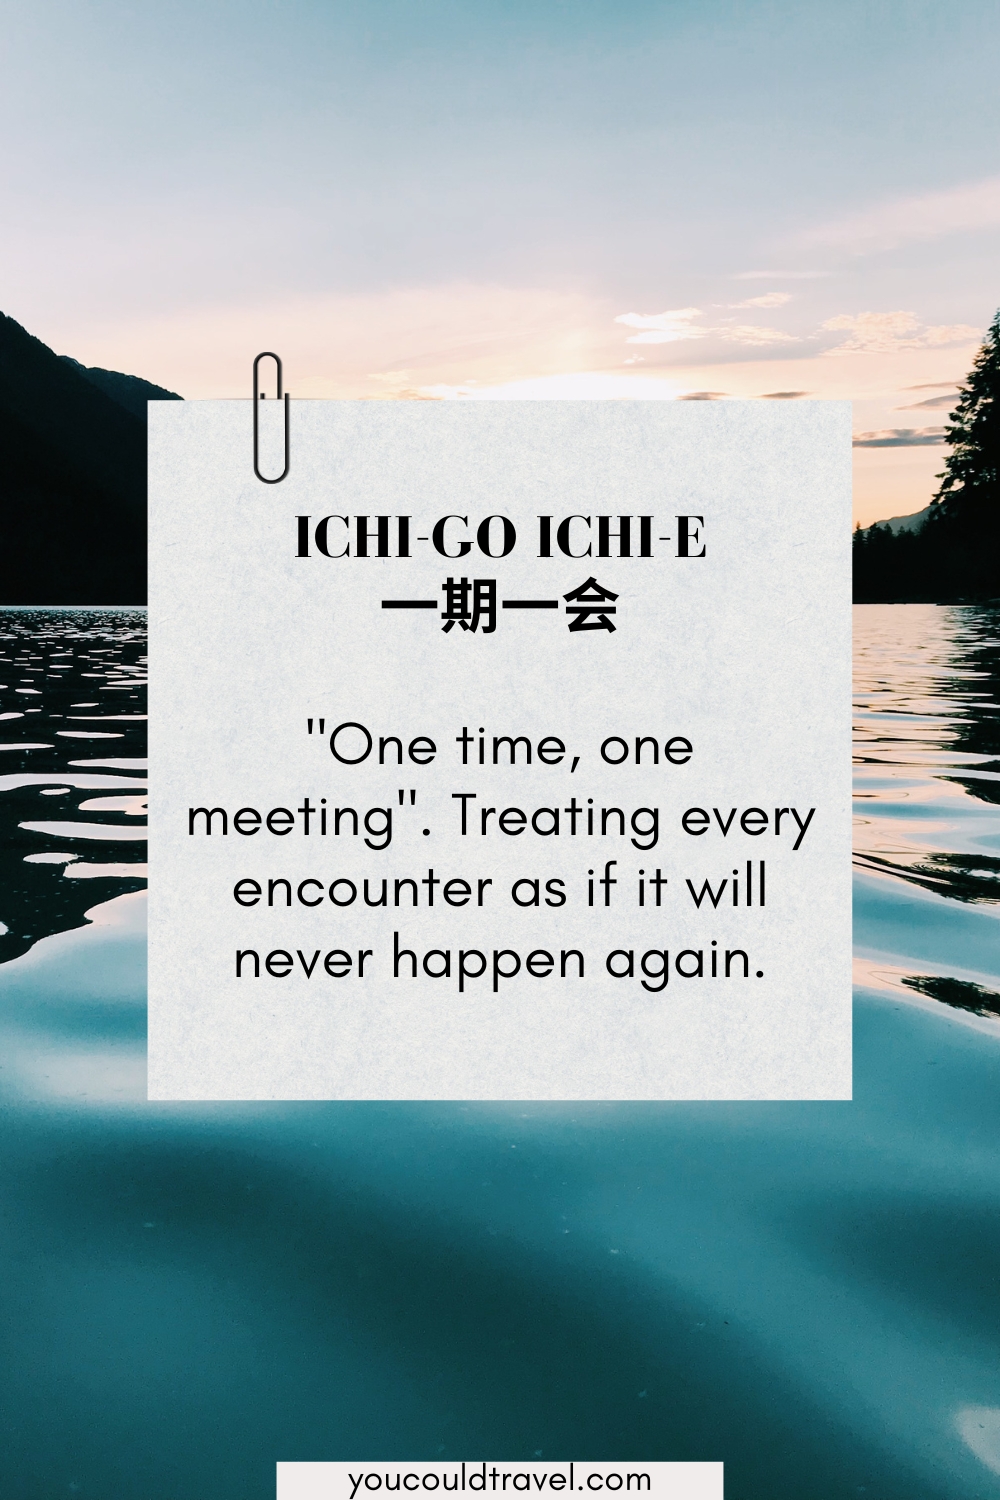 Ichi-go ichi-e - one time, one meeting